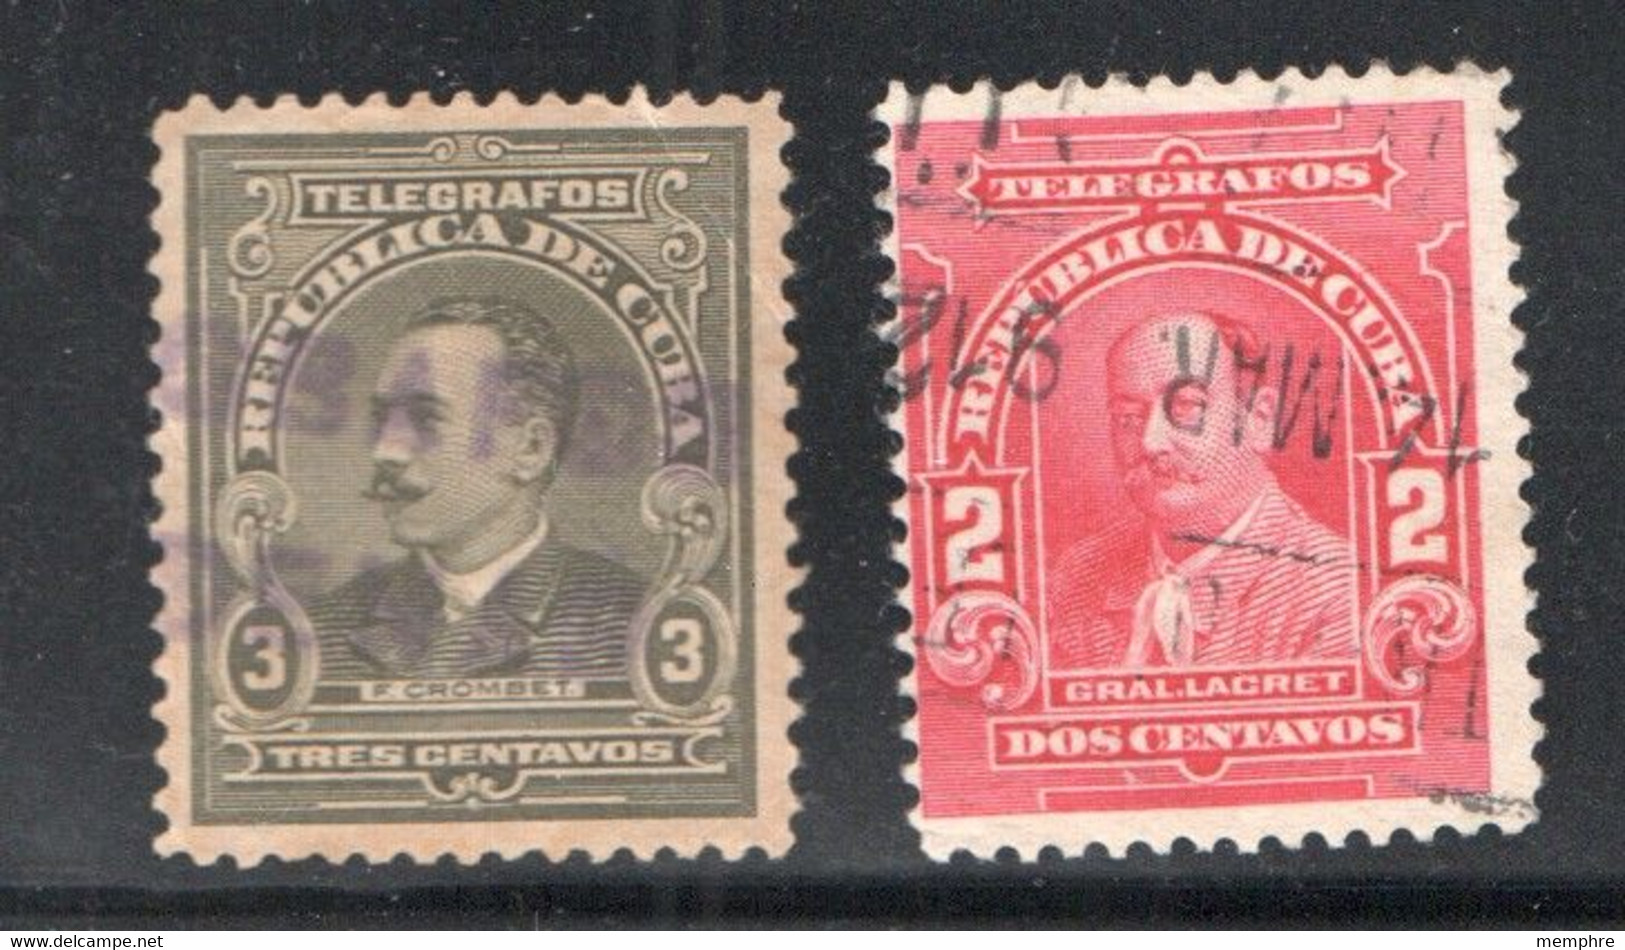 Telegraph Stamps Ed 87, 93 Used - Telegraphenmarken